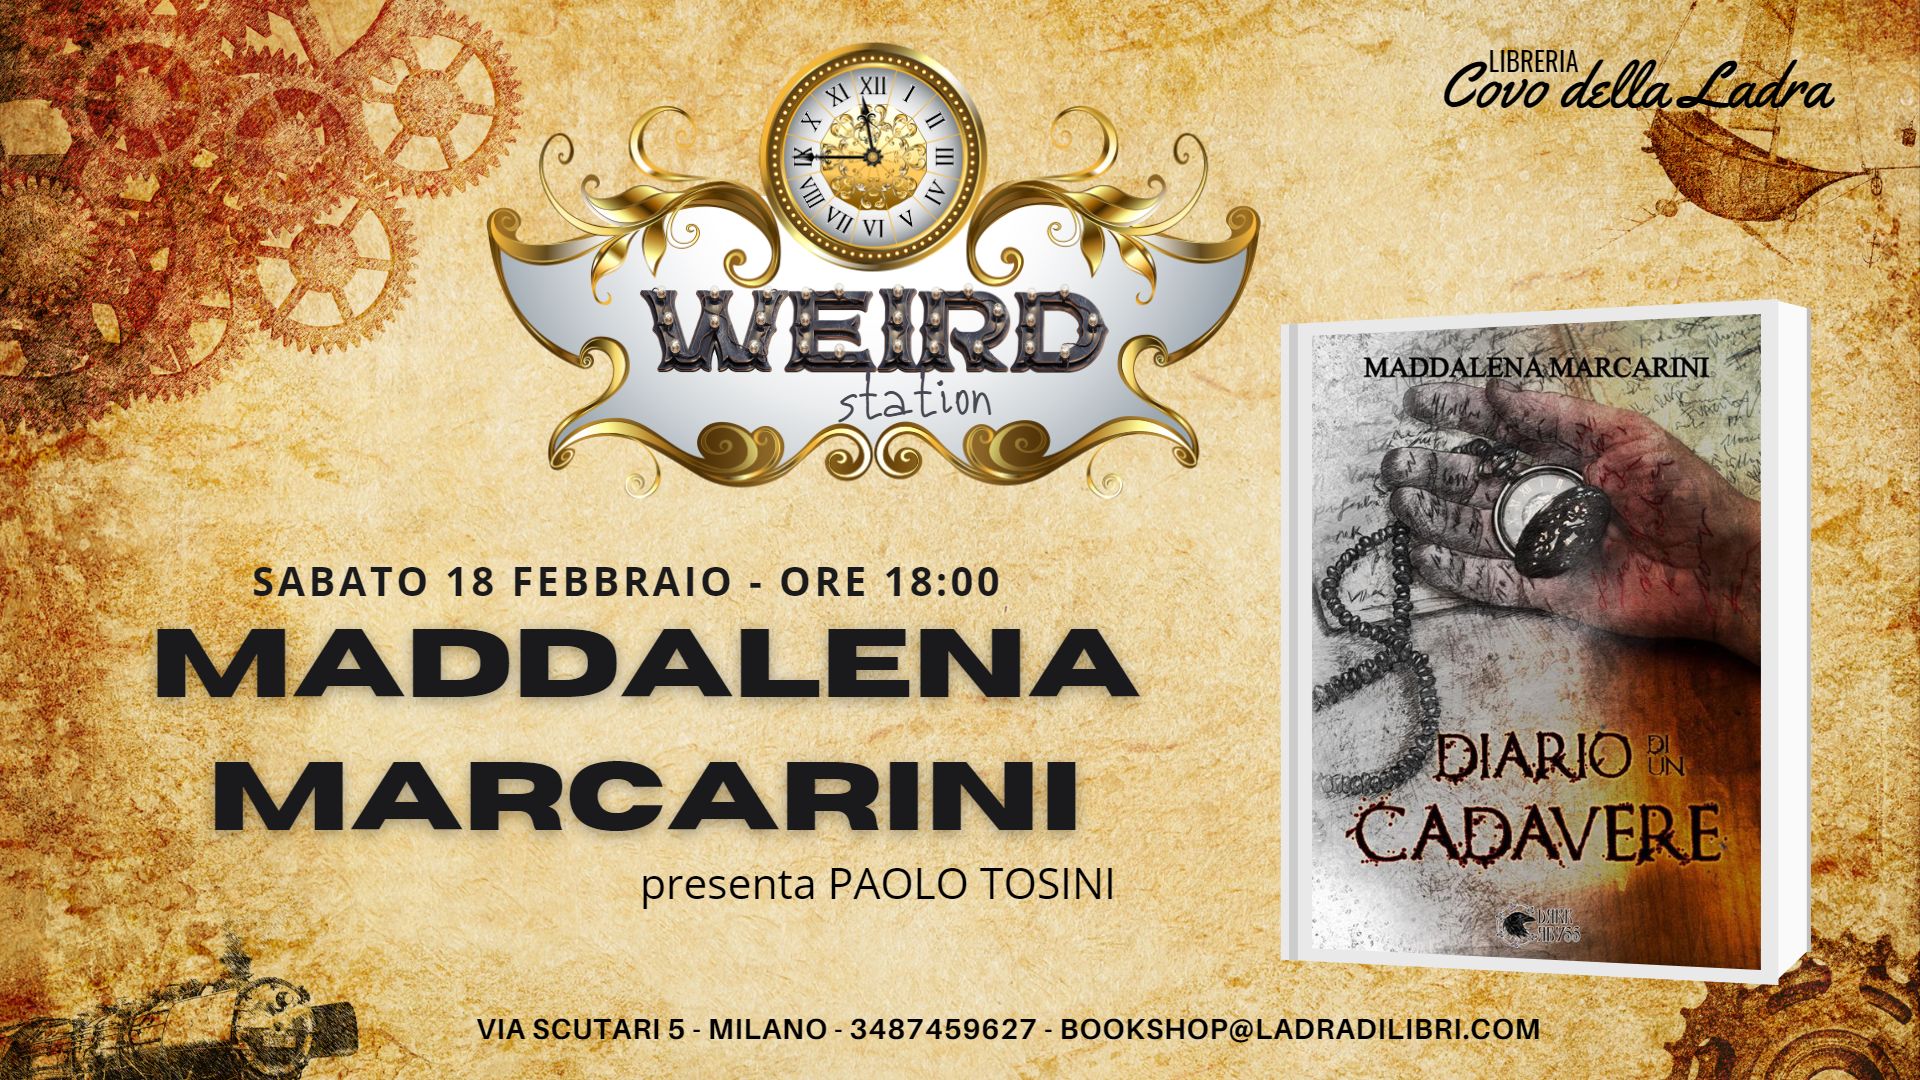 Maddalena Marcarini e “Diario di un Cadavere” – Weird Station